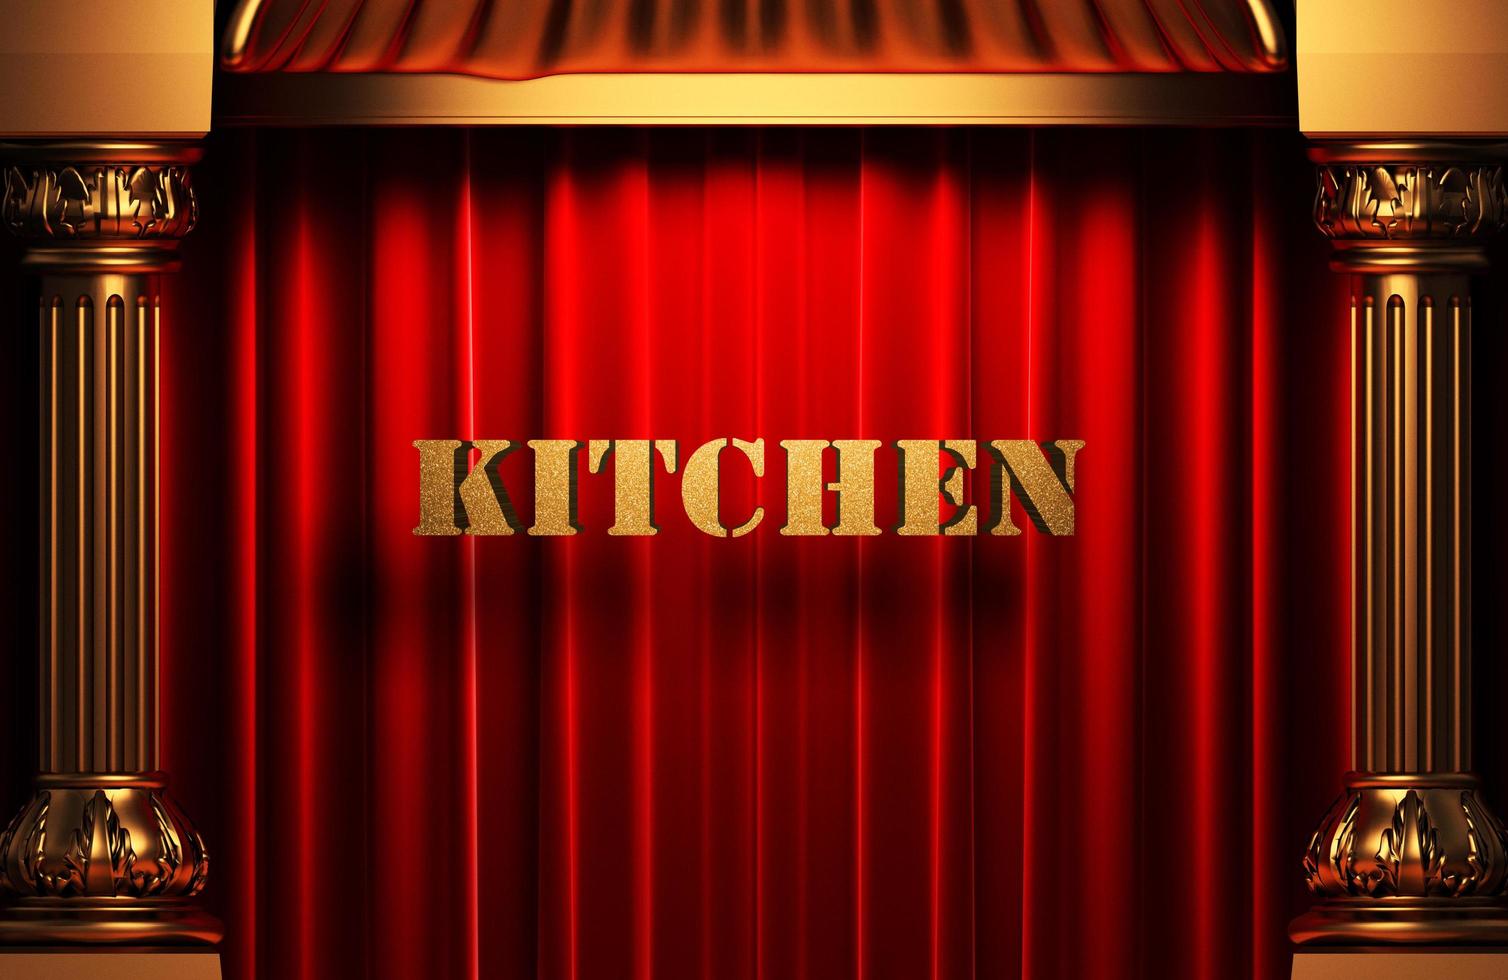 kitchen golden word on red curtain photo